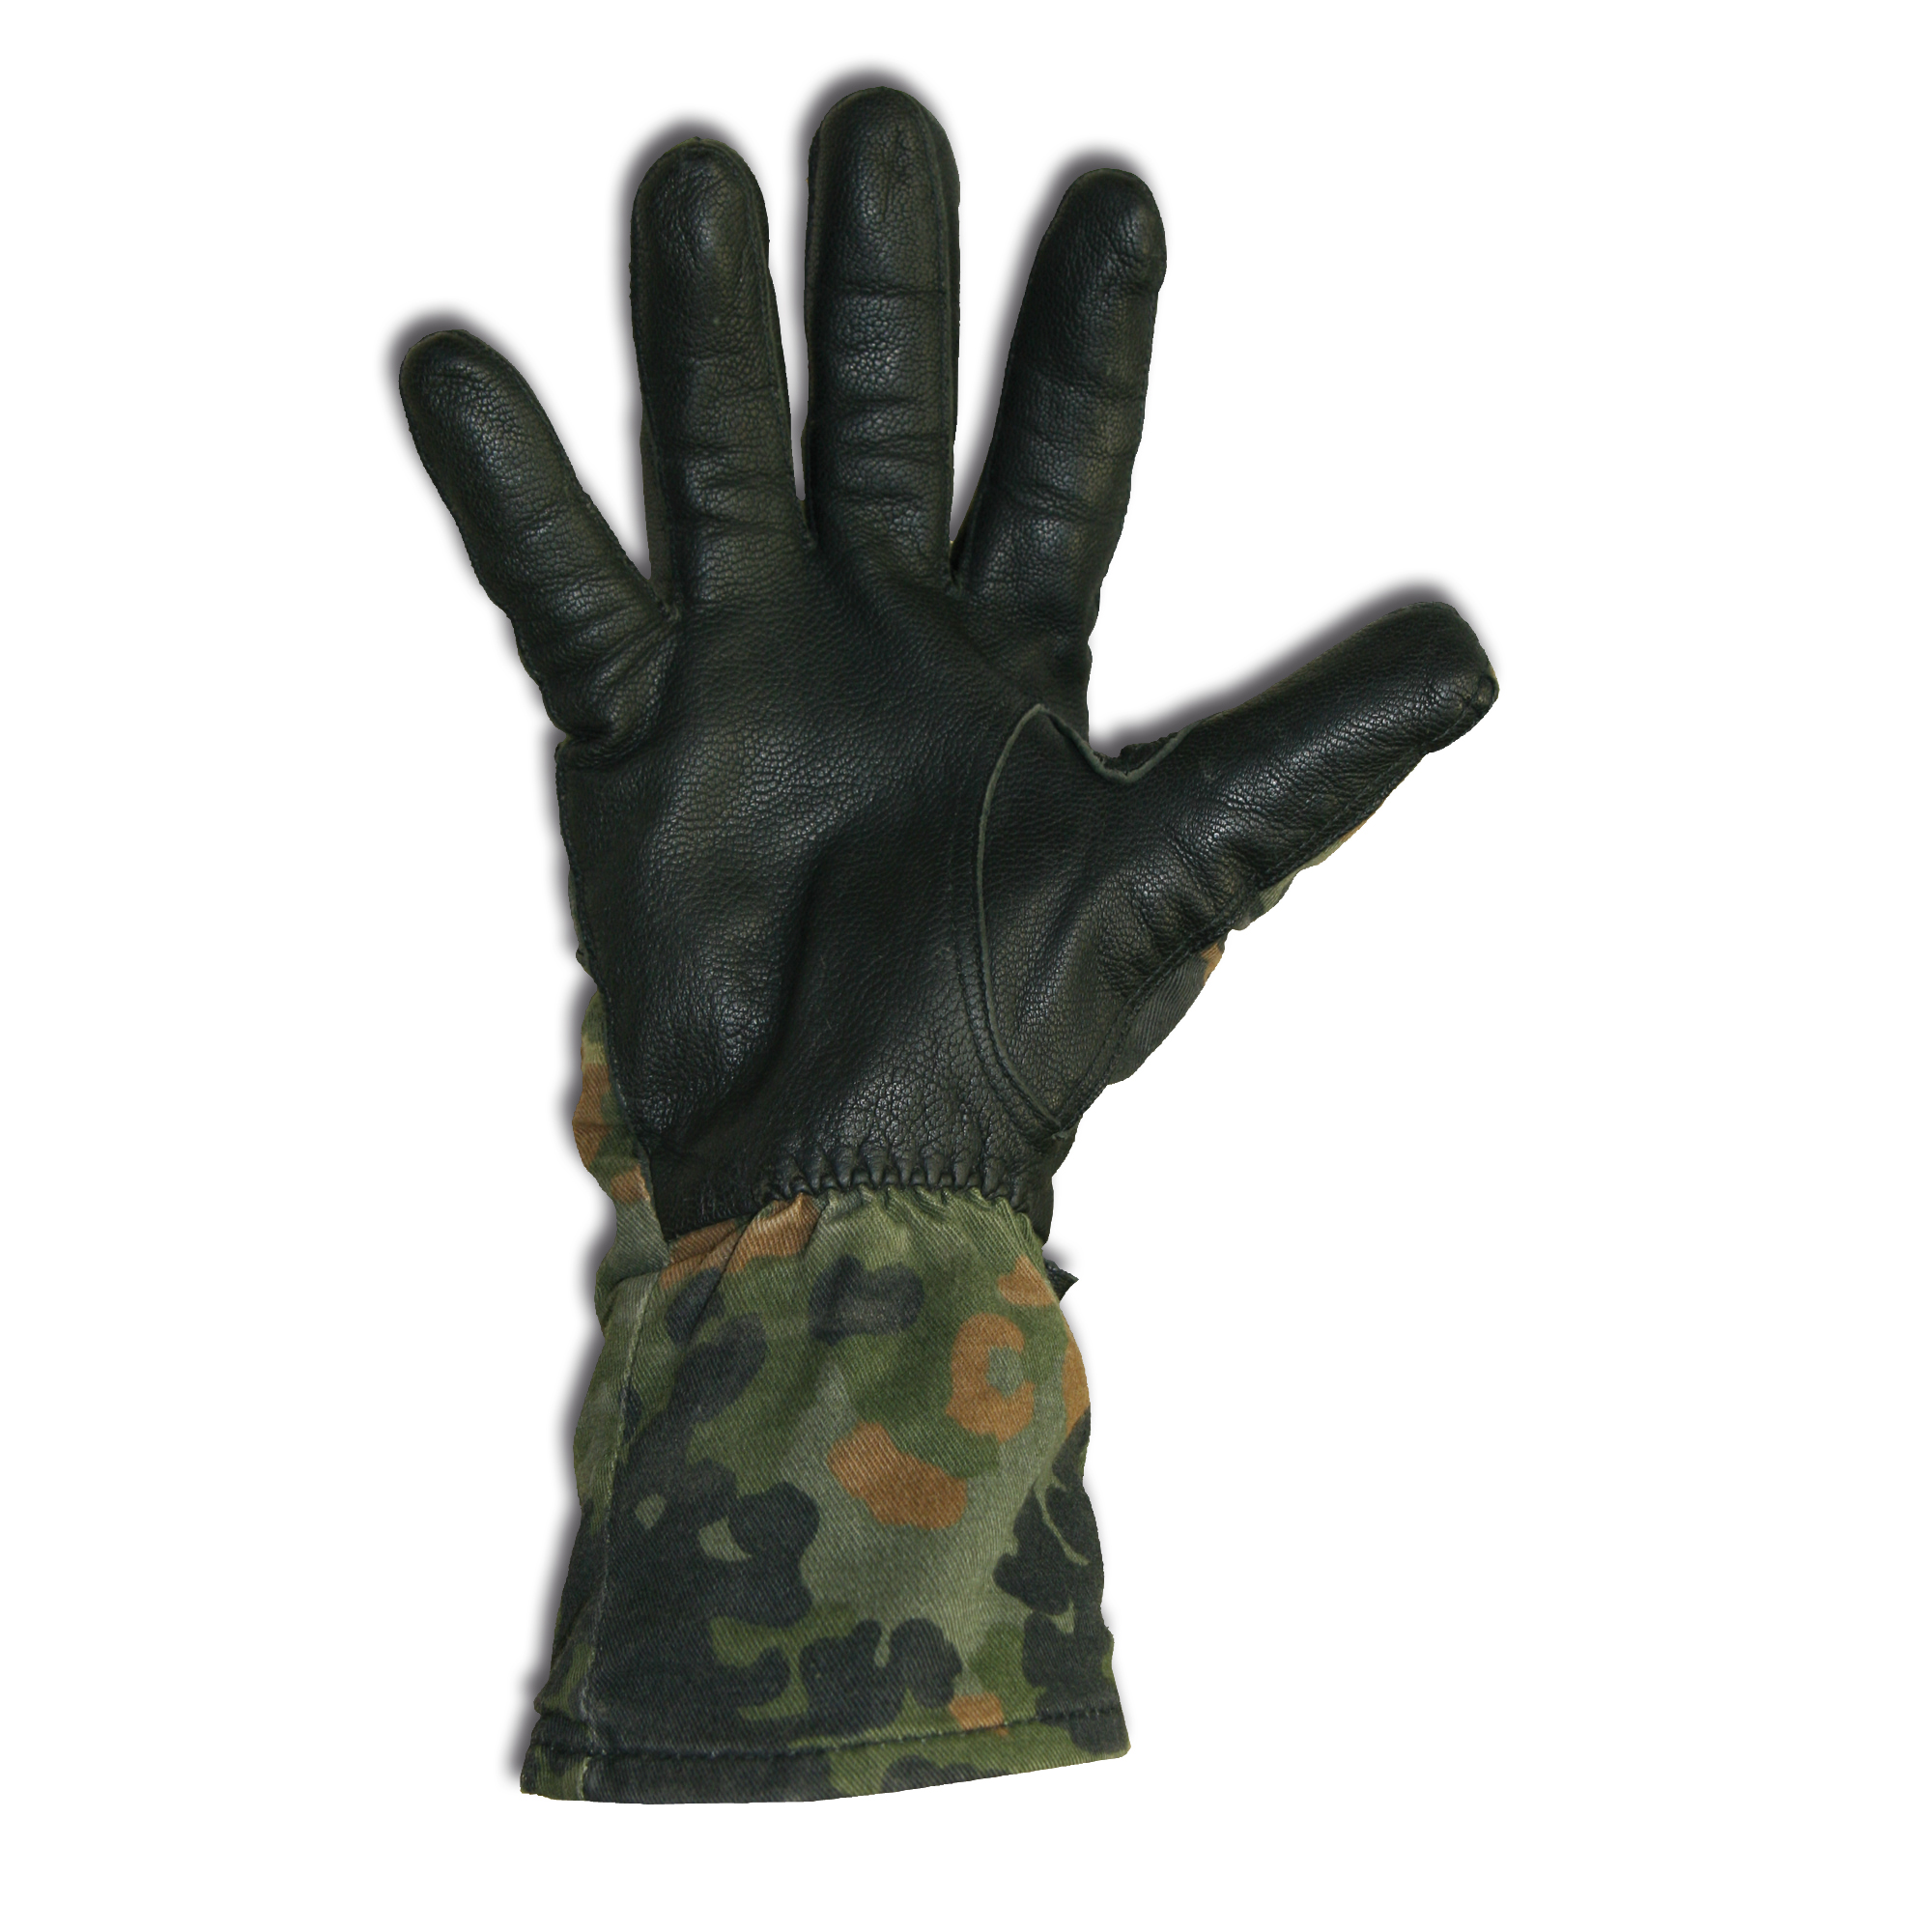 BW Handschuhe Kampfhandschuhe Lederbesatz schwarz oliv coyote NEU Größe S XXL 